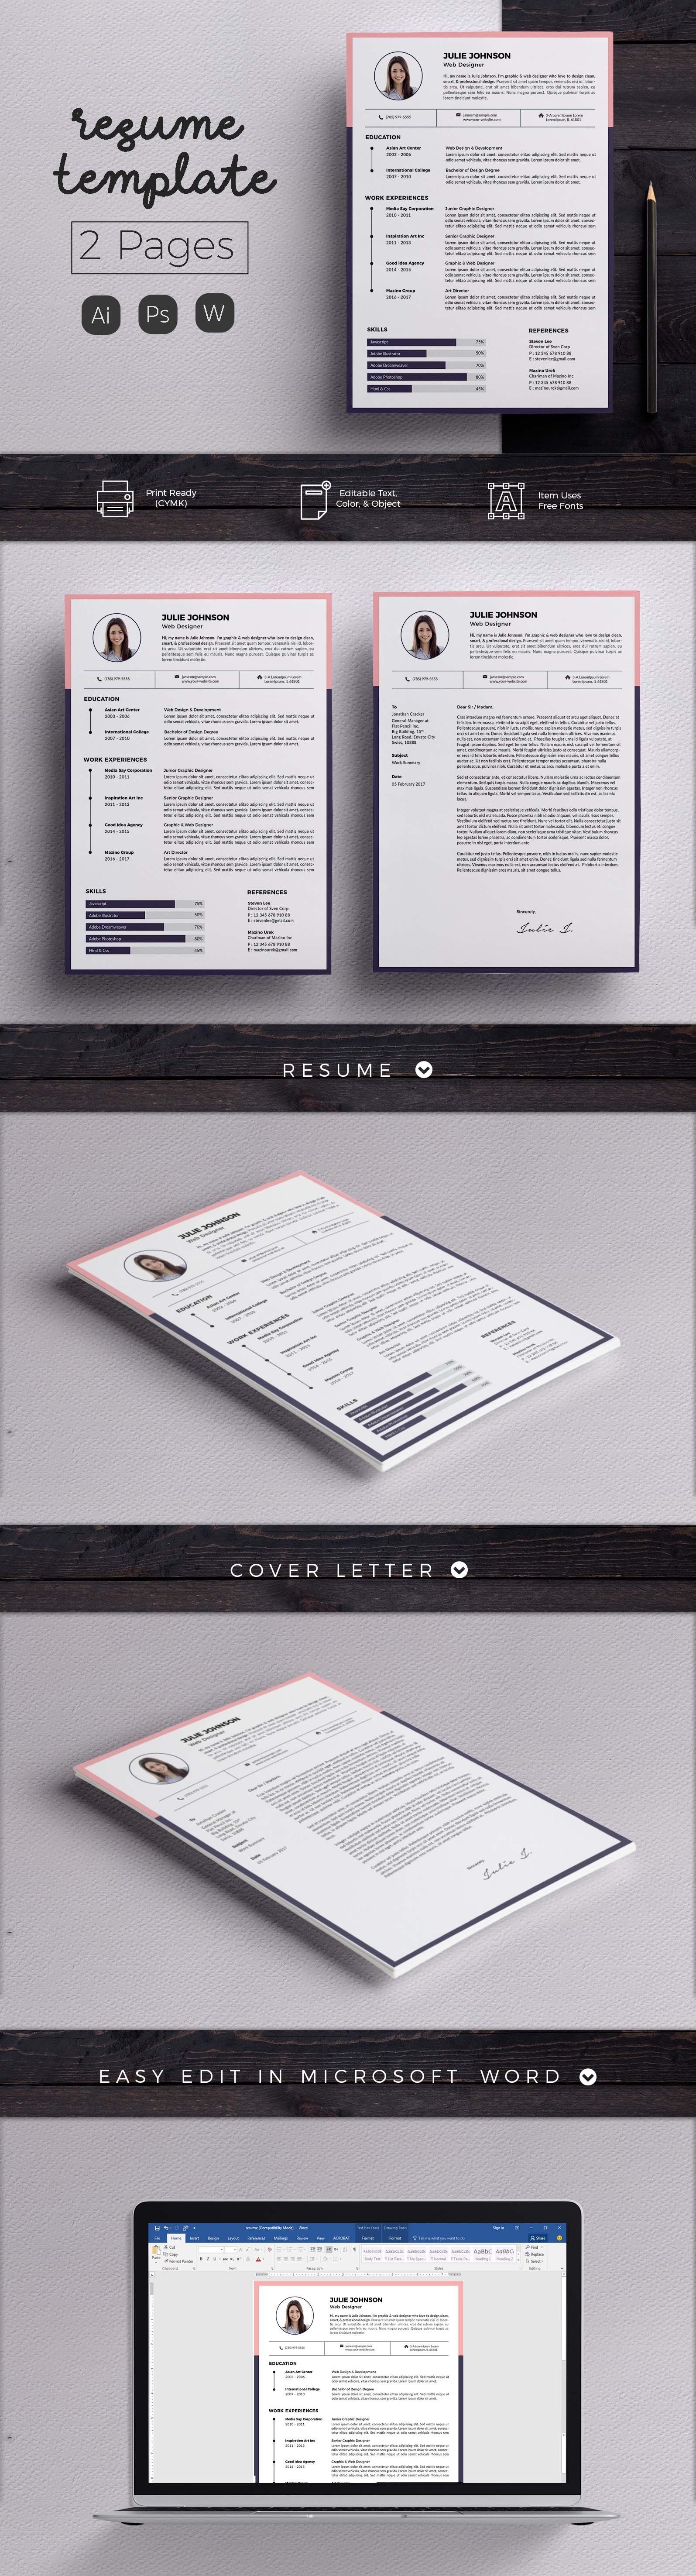 Modern Resume & CV Template cover image.